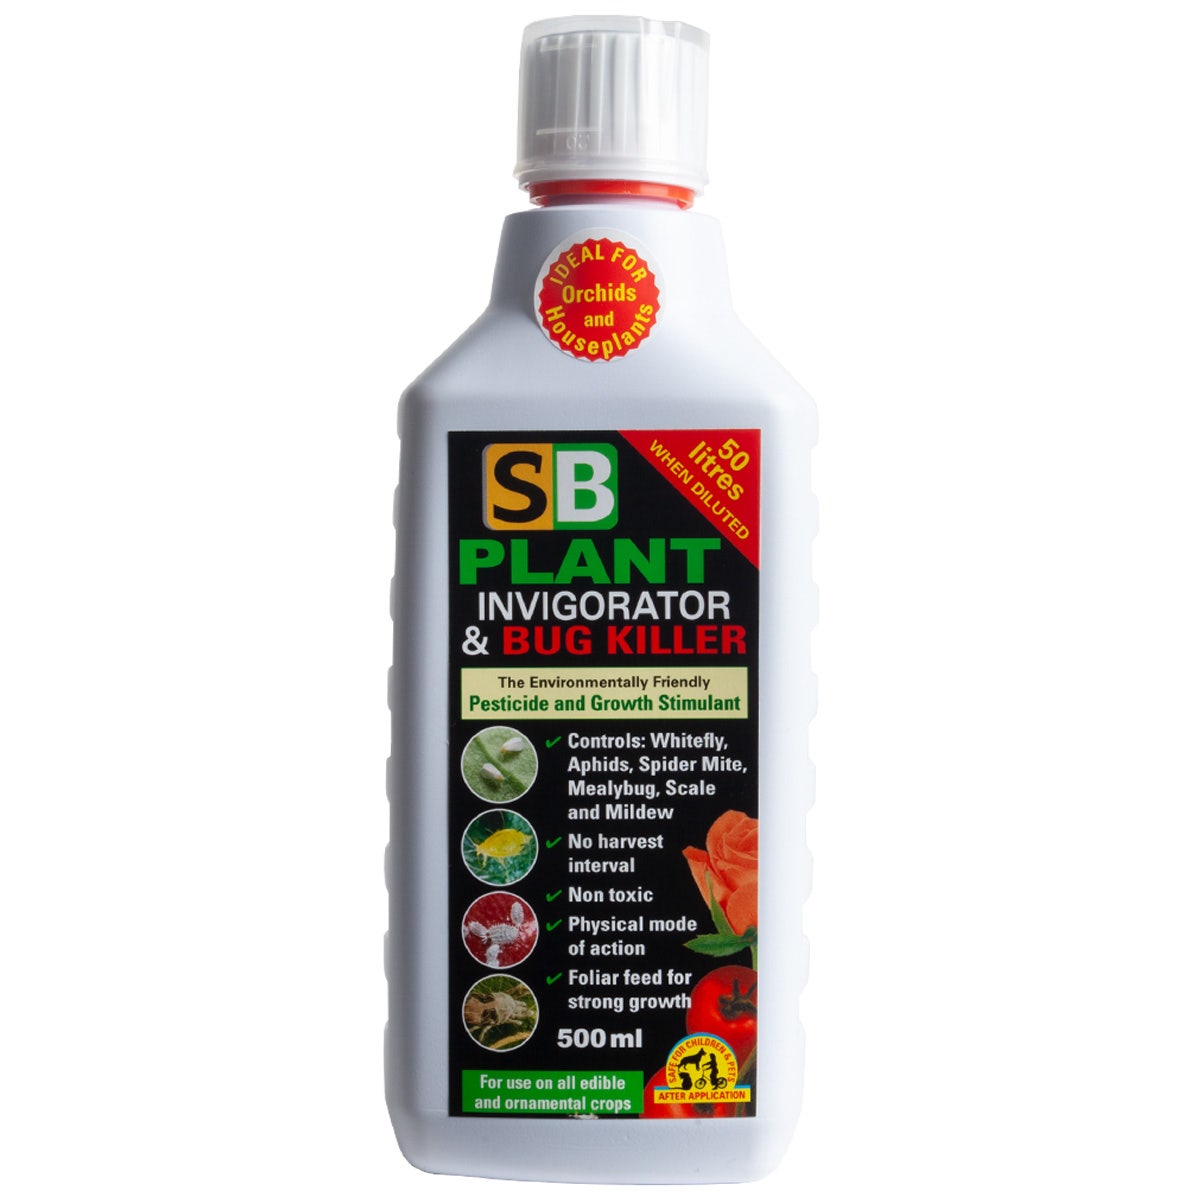 Spray2Grow - Spray anti-moisissure